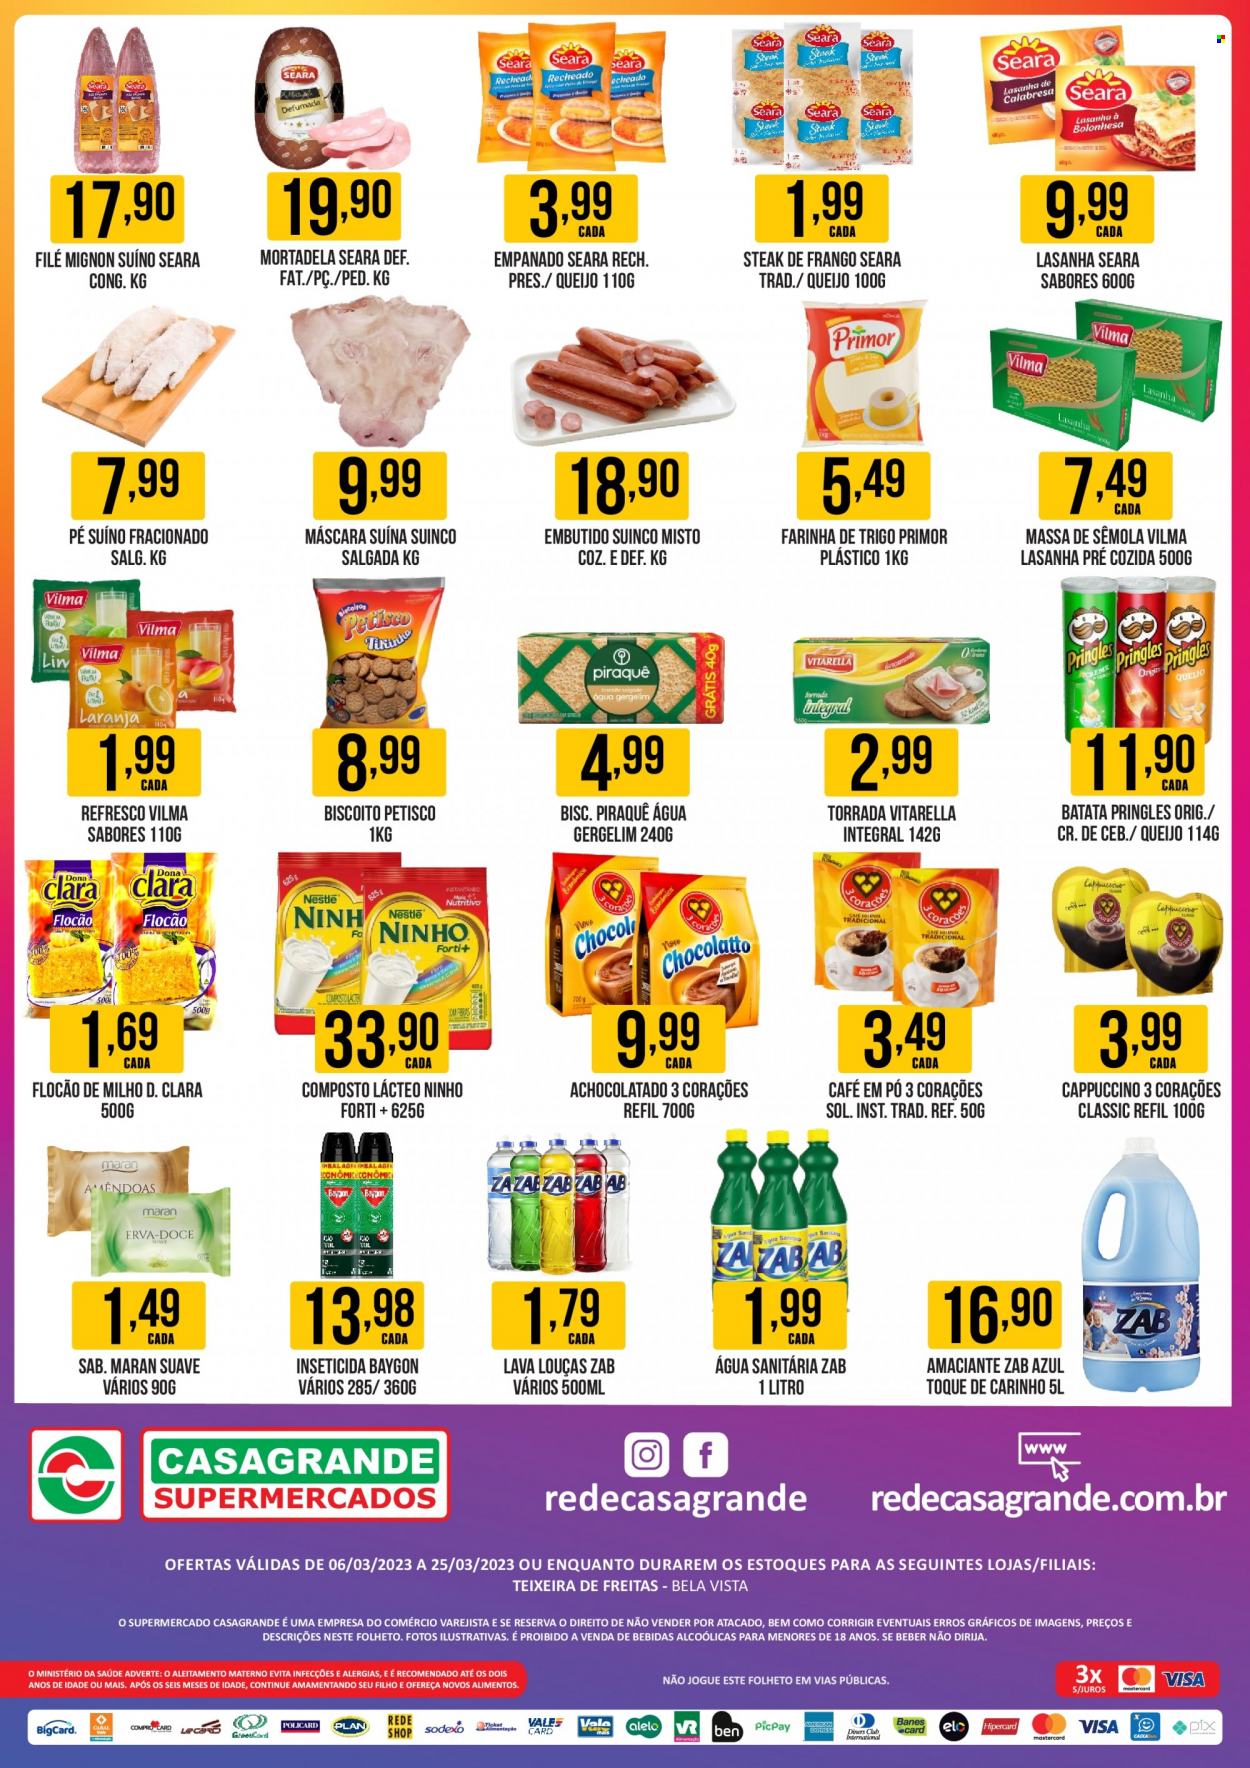 Encarte Casagrande Supermercados  - 06.03.2023 - 25.03.2023.